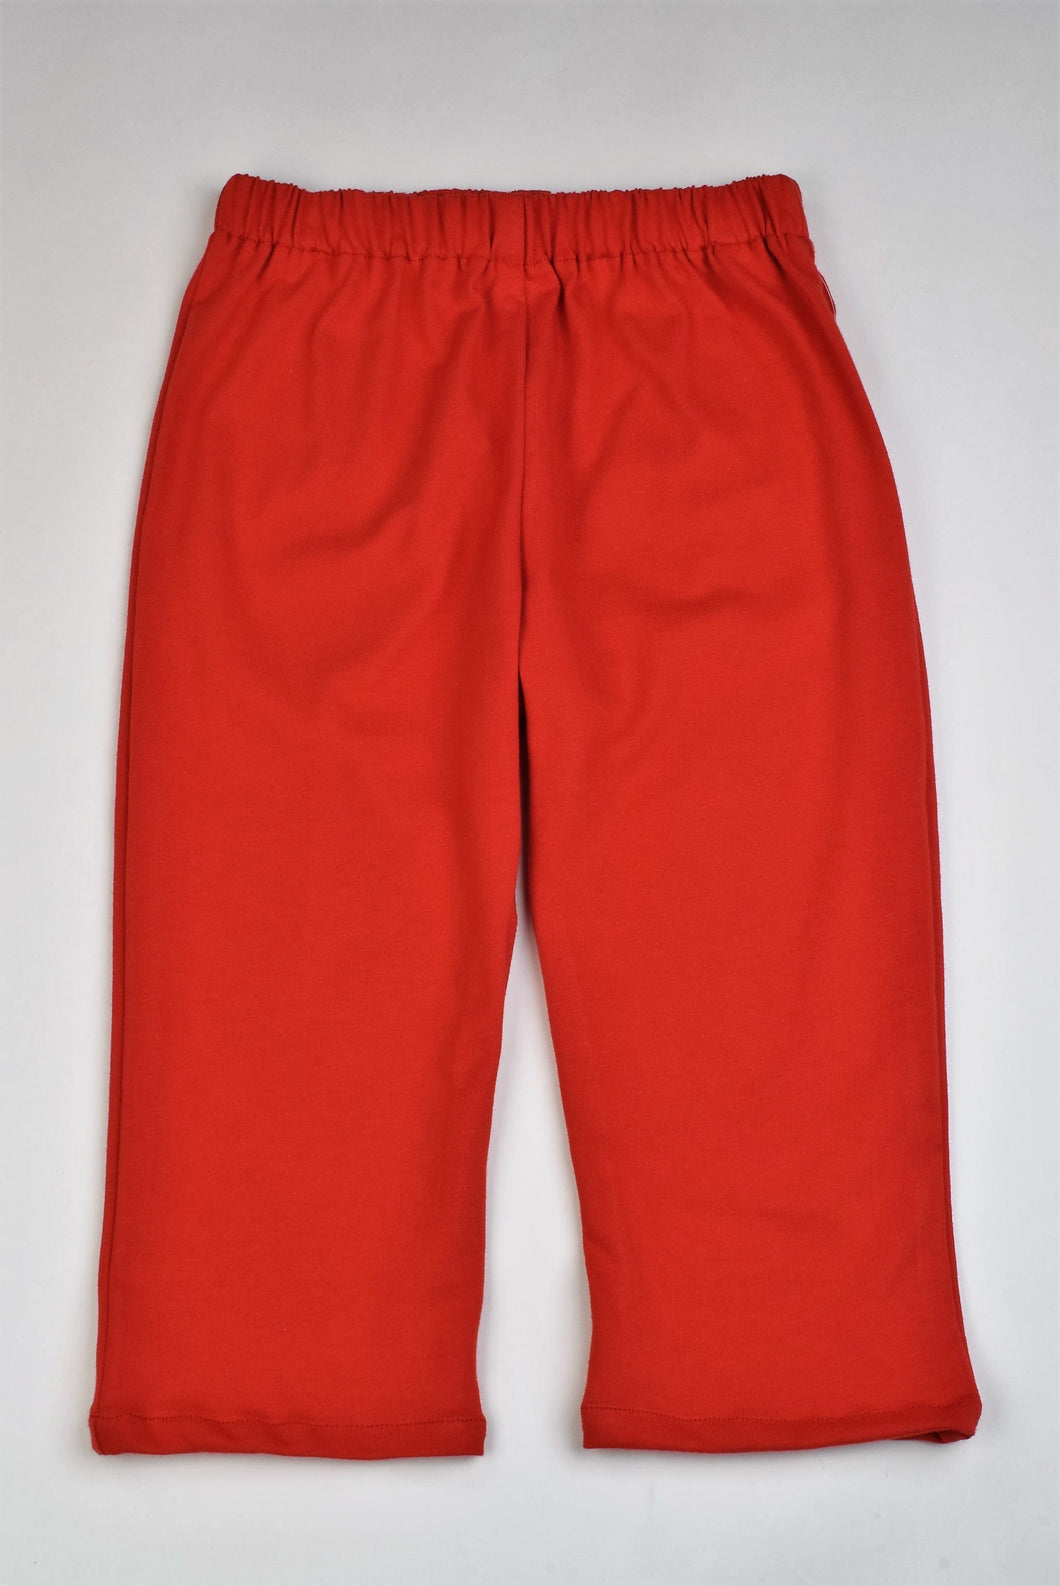 Boys Red Knit Pants